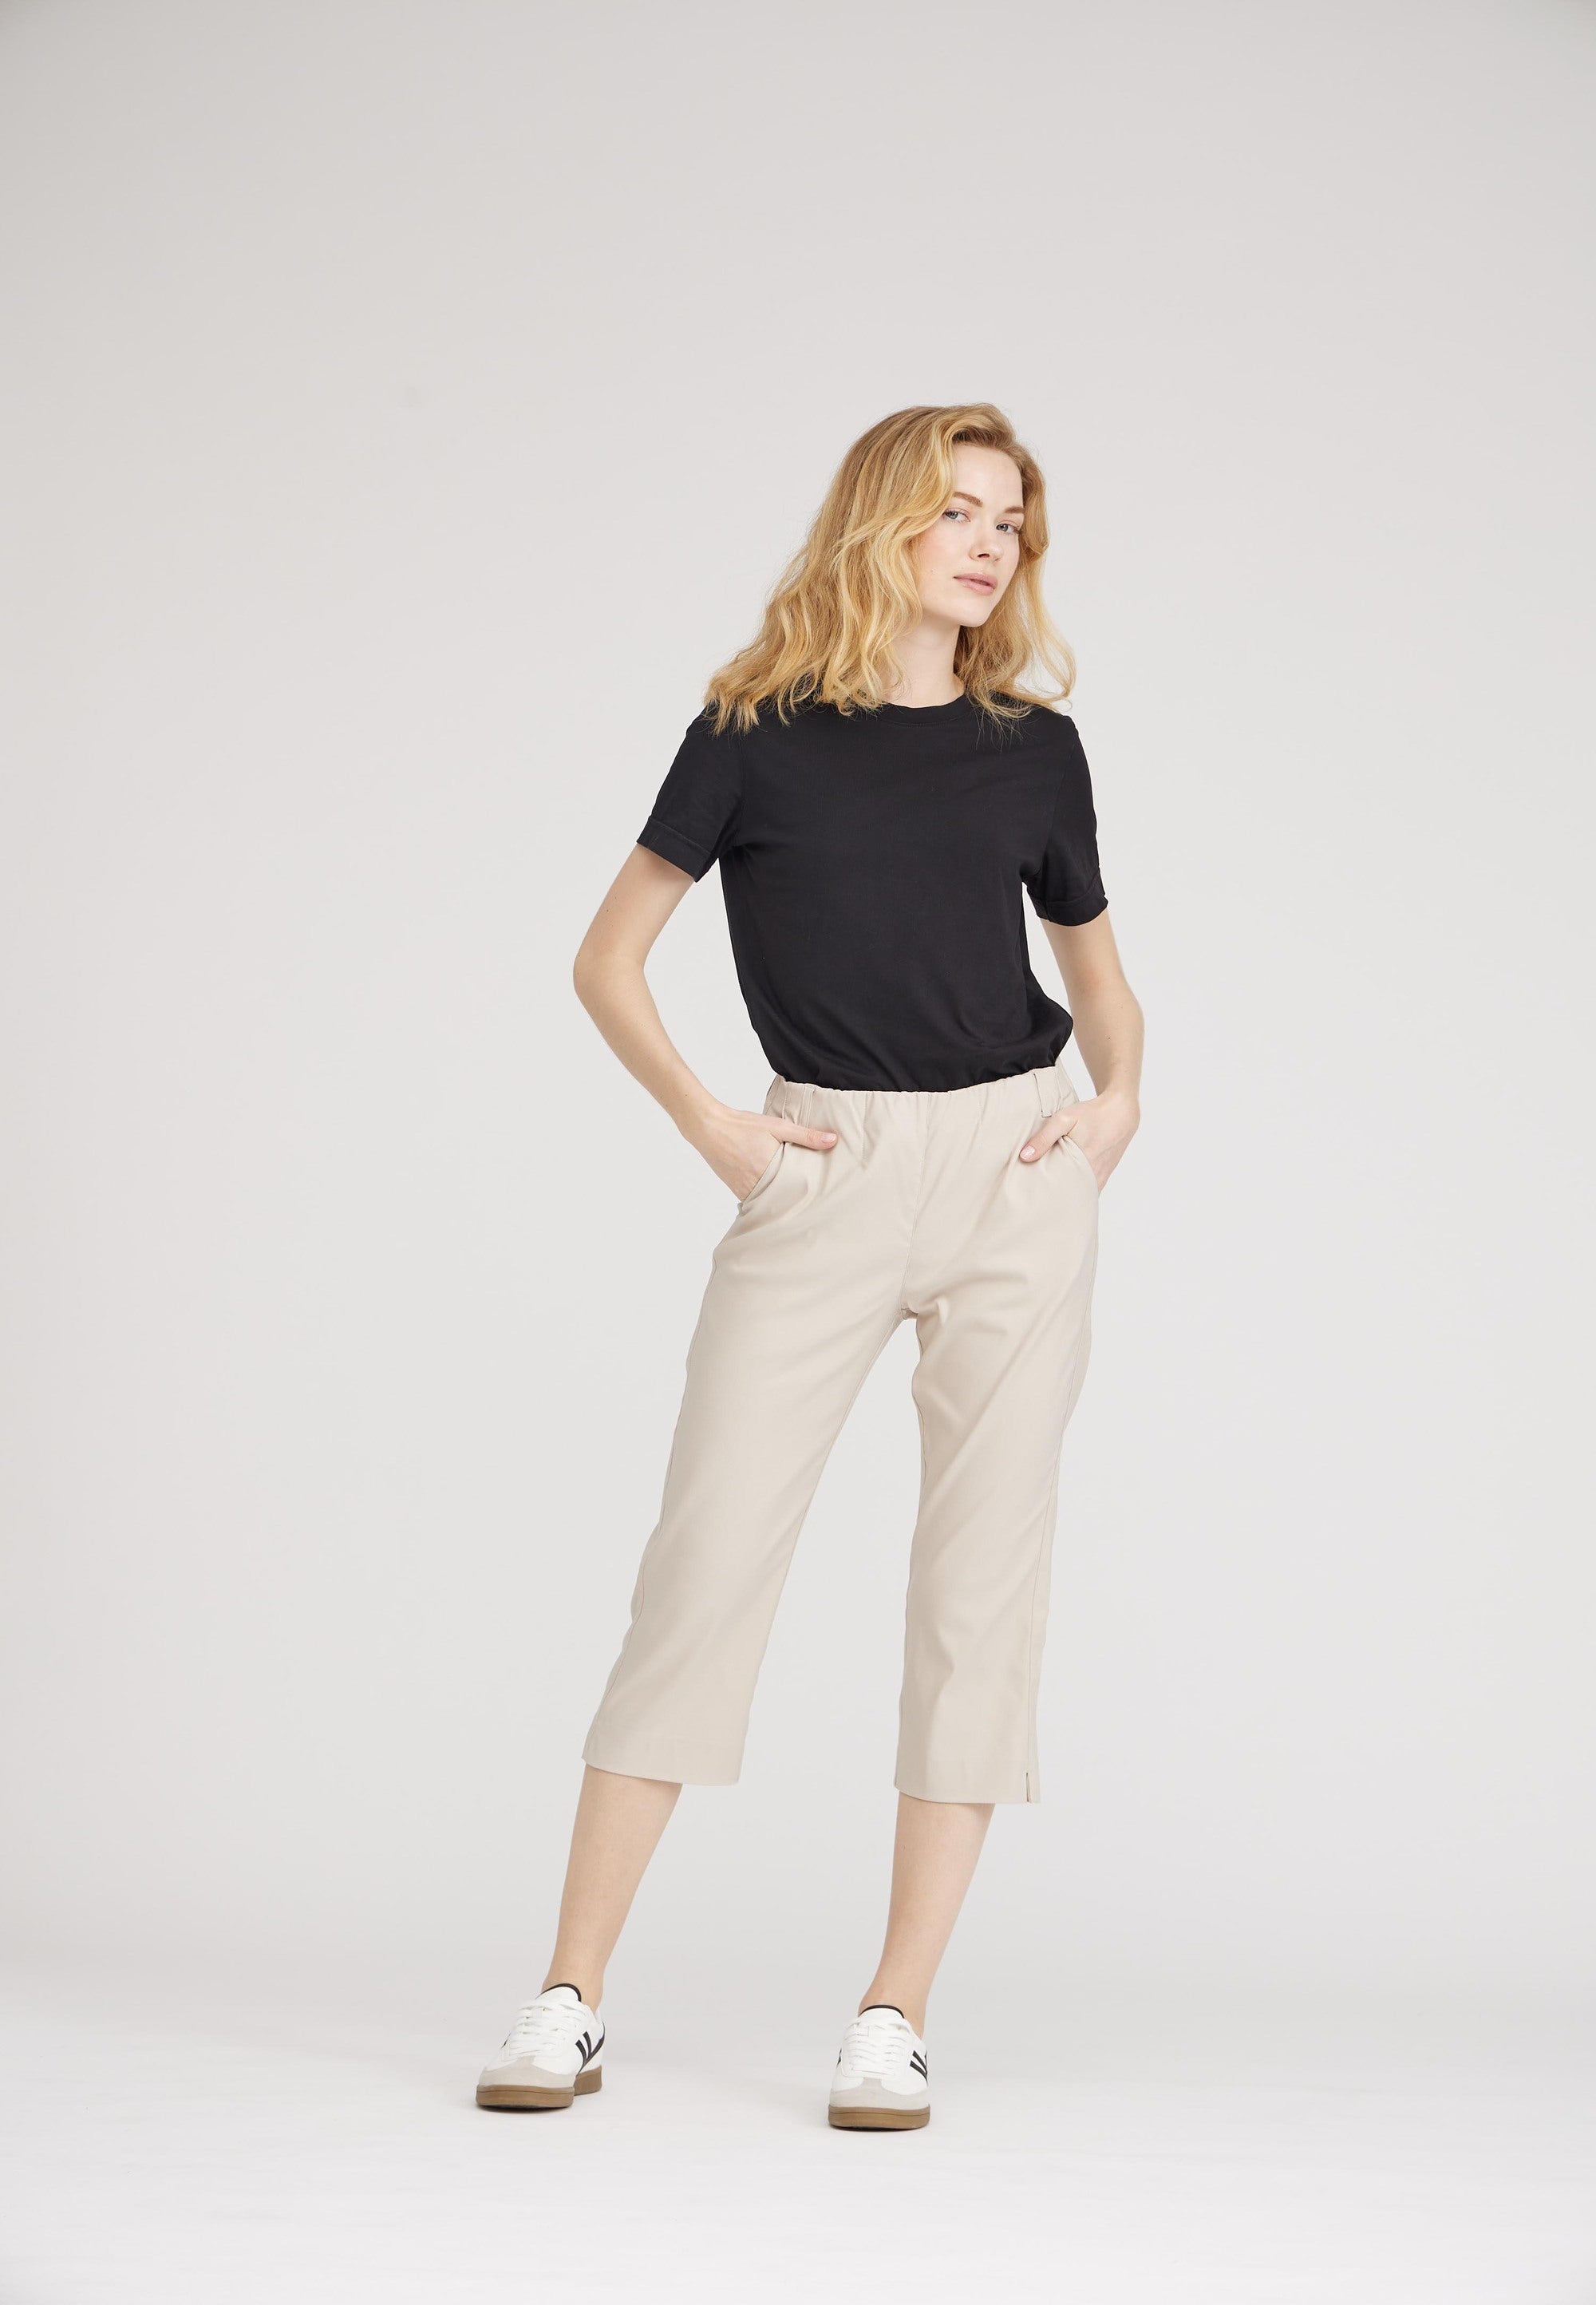 LAURIE Taylor Regular Capri Medium Length Trousers REGULAR 25000 Grey Sand